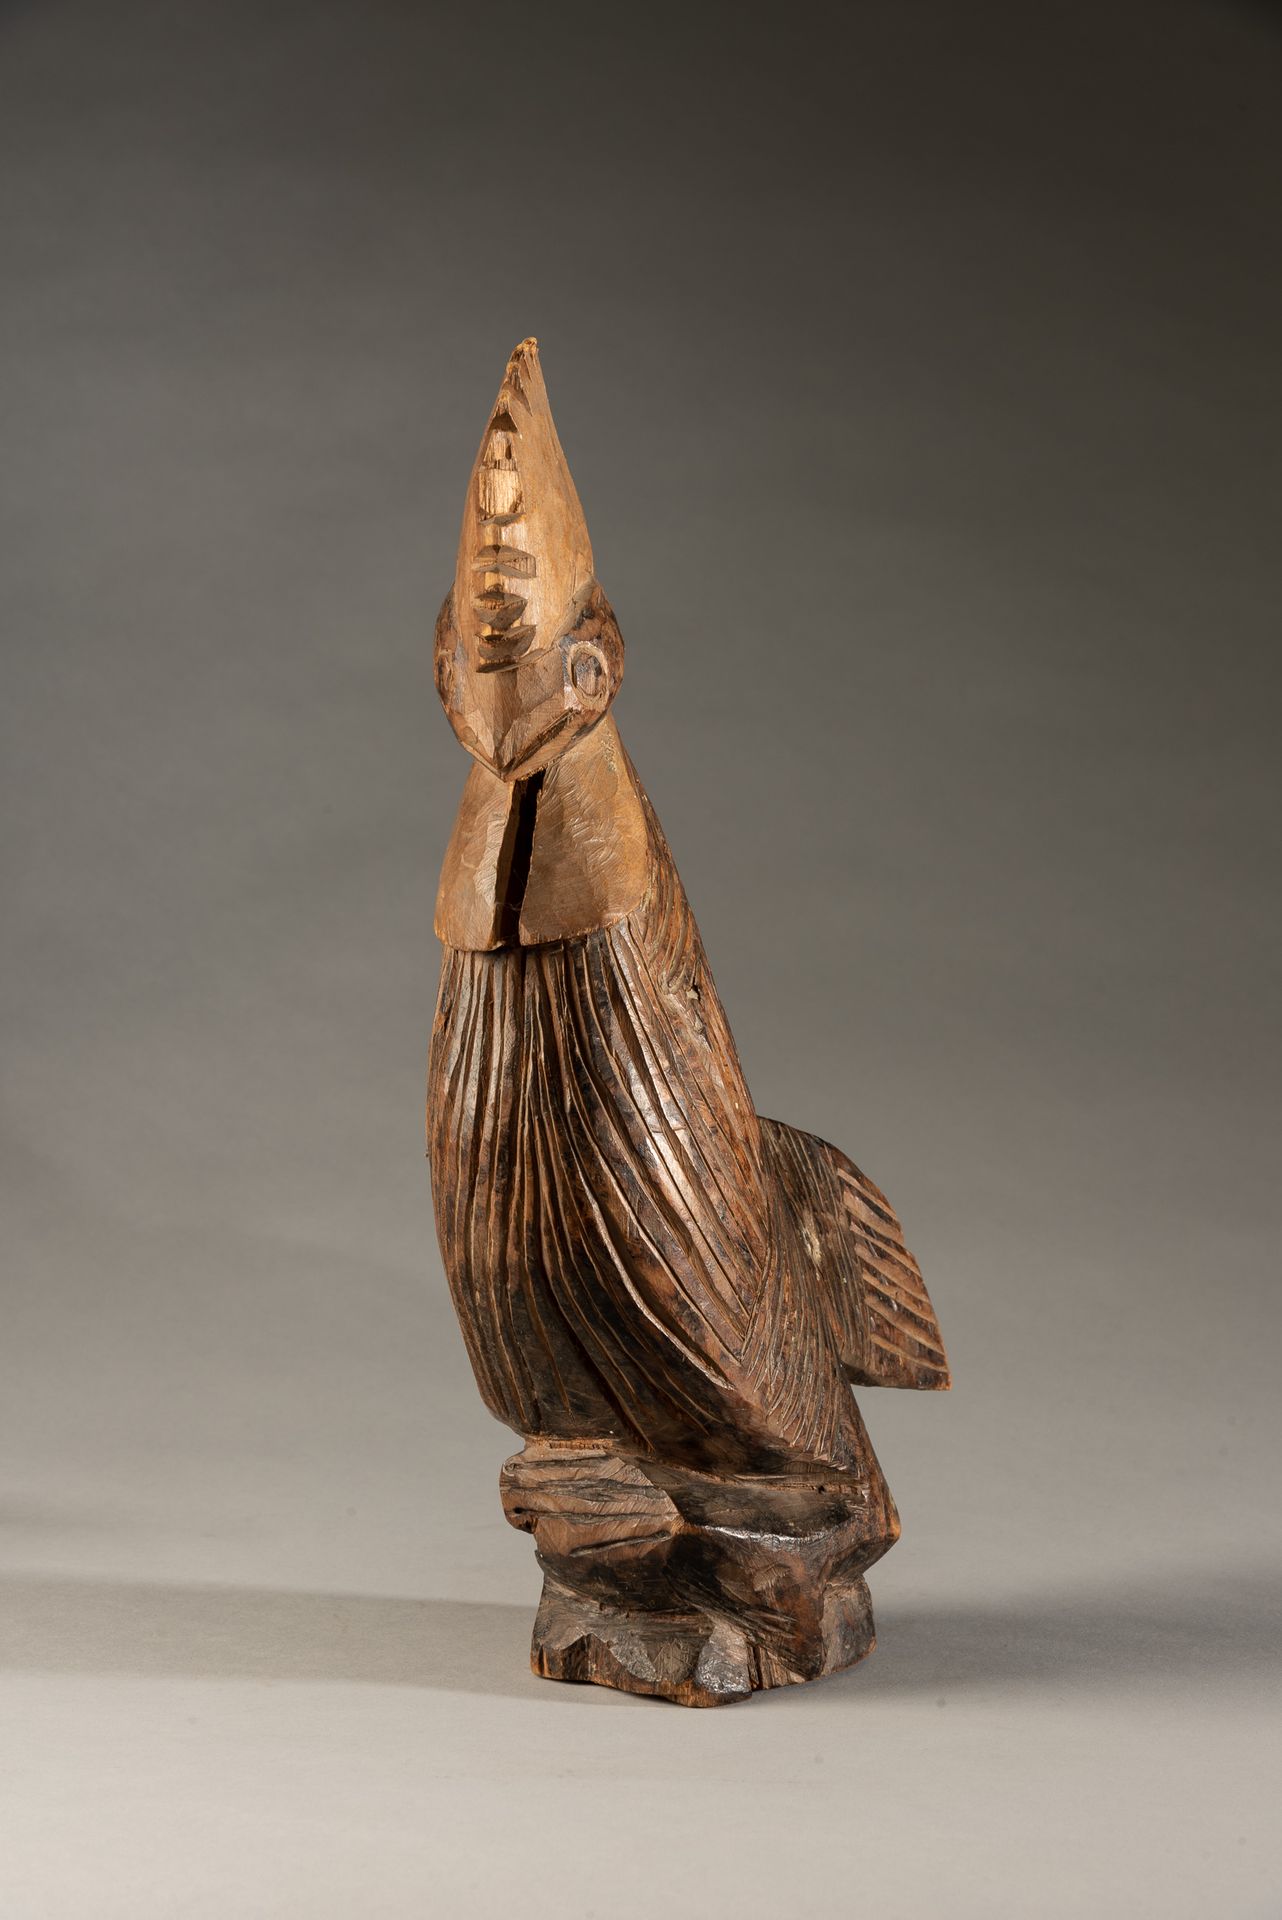 Null "Gallo de madera", Nigeria - Figura tribal de gallo tallada en madera. 



&hellip;